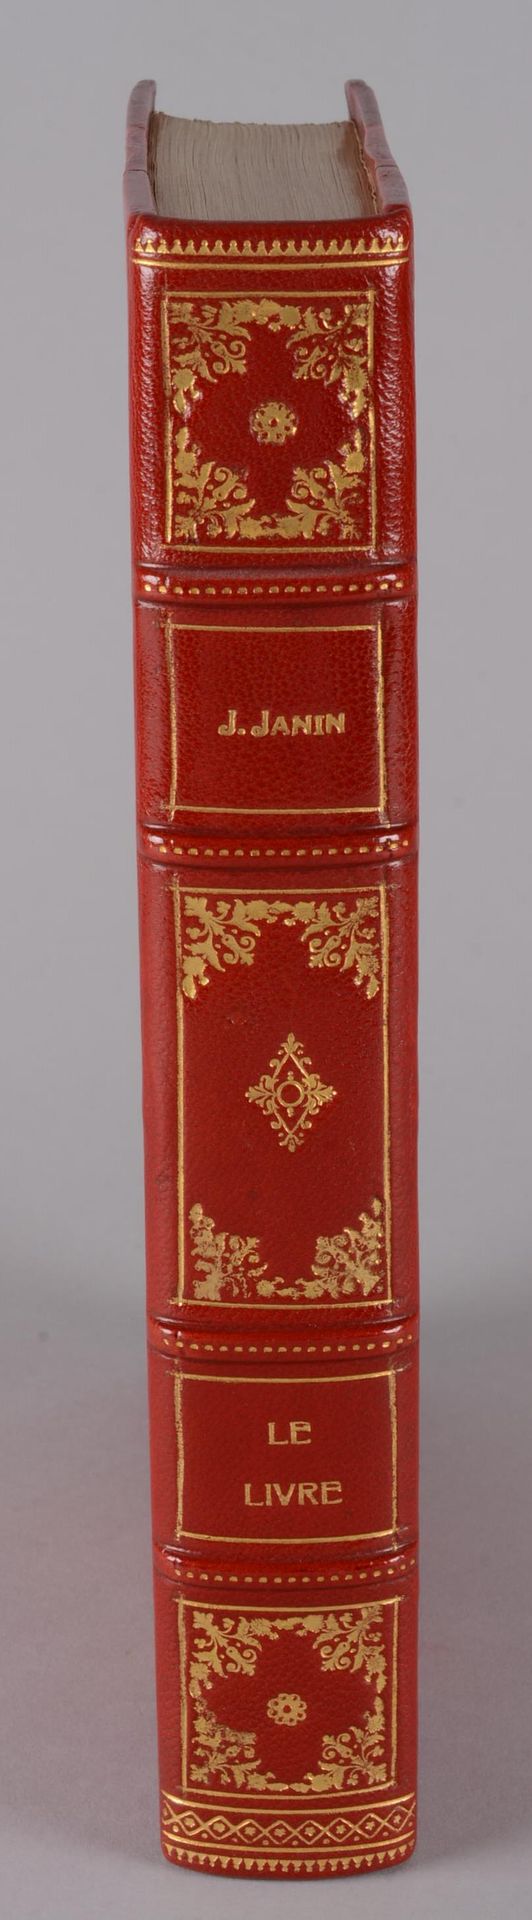 JANIN Jules JANIN Jules 



Das Buch



 Paris, Plon, 1870



 Groß in-8°. Halb &hellip;